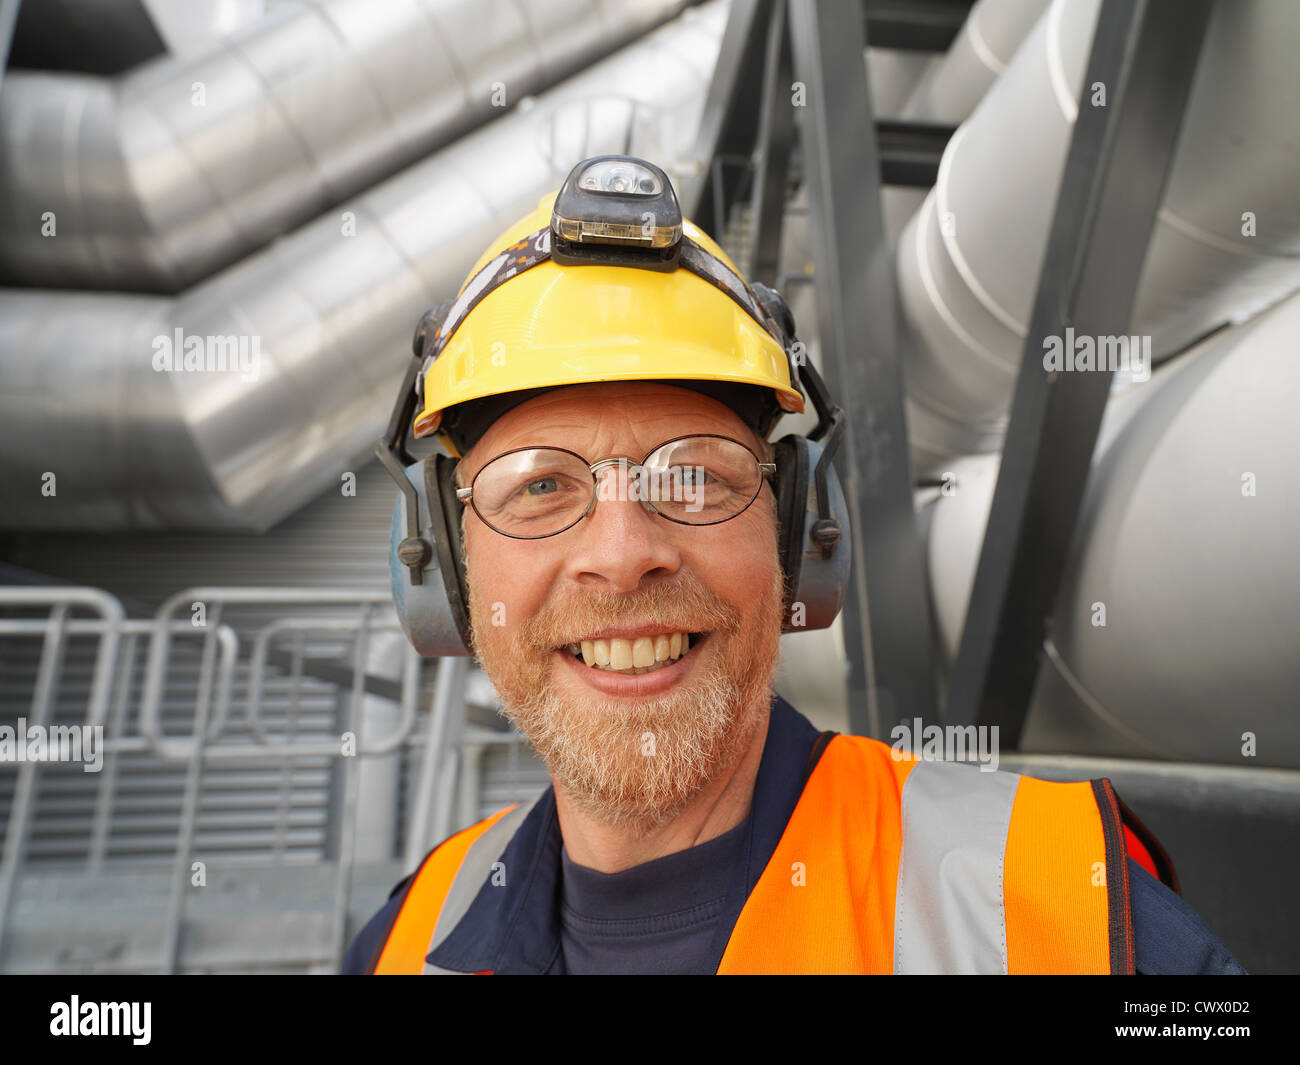 Worker wearing hard hat in factory Stock Photo